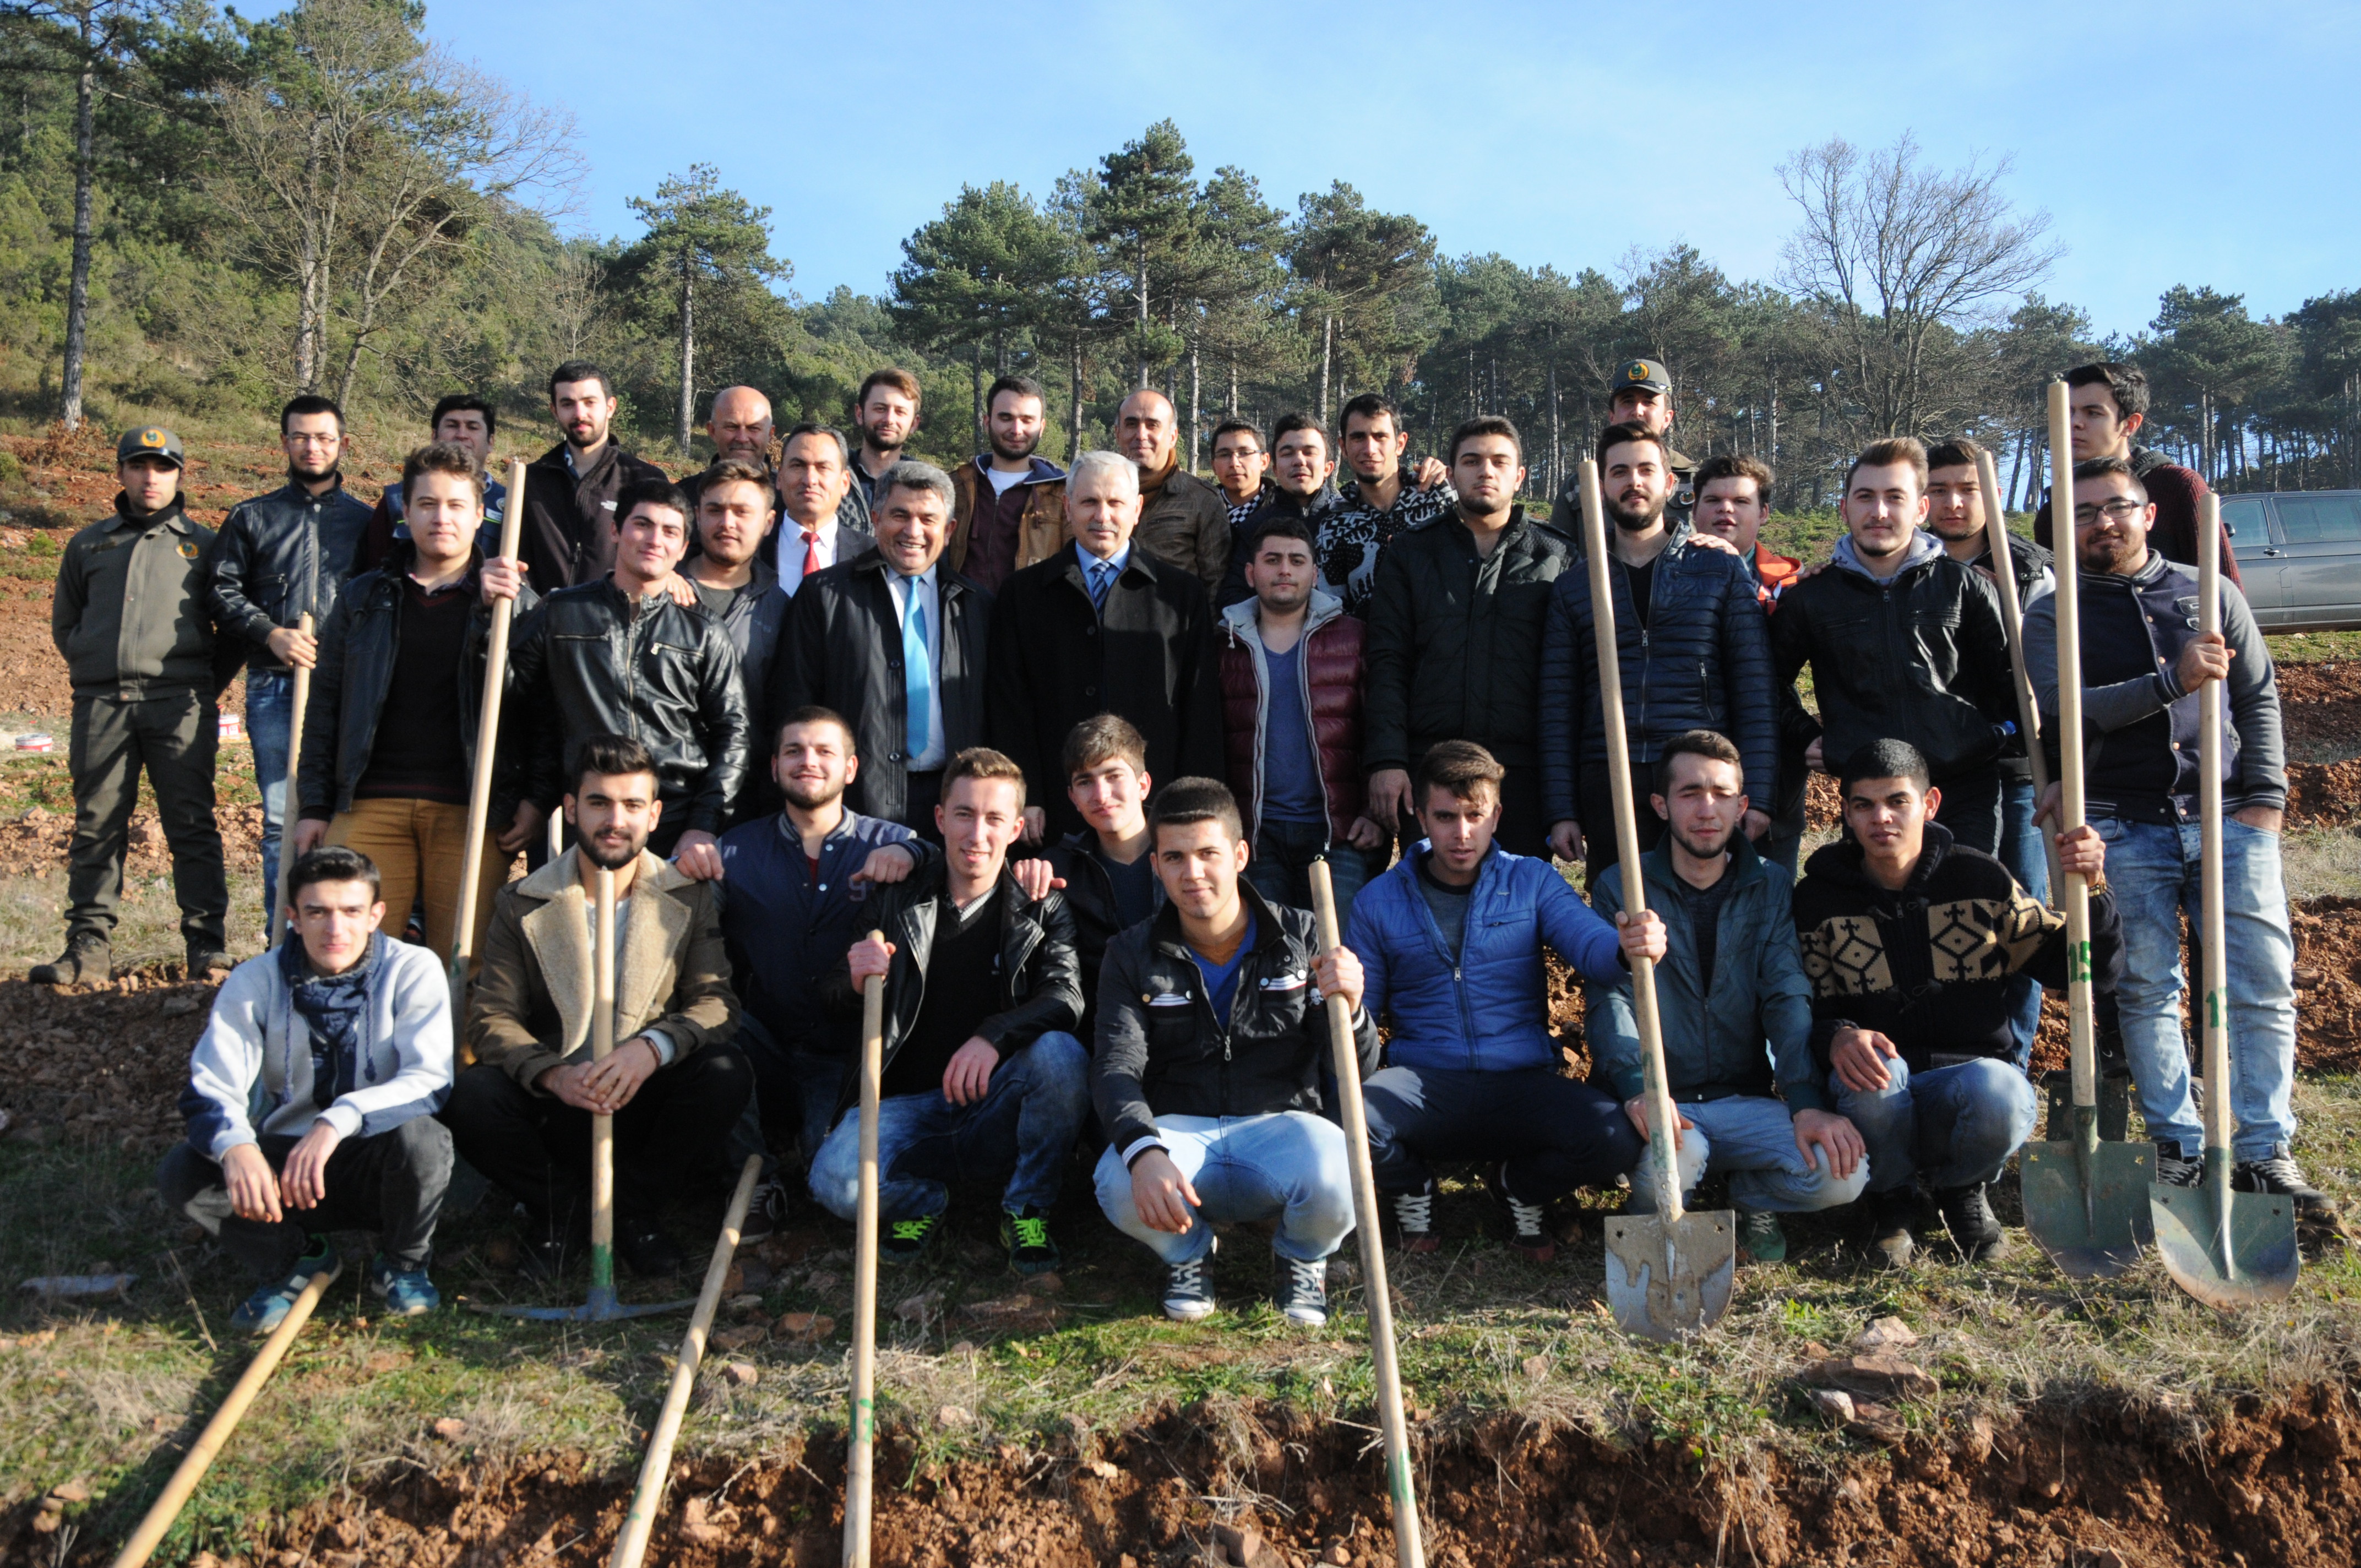 Büyükorhan Vocational School Students are the mulberry planting ceremony in the village Düğüncü organized by Bursa Regional Directorate of Forestry